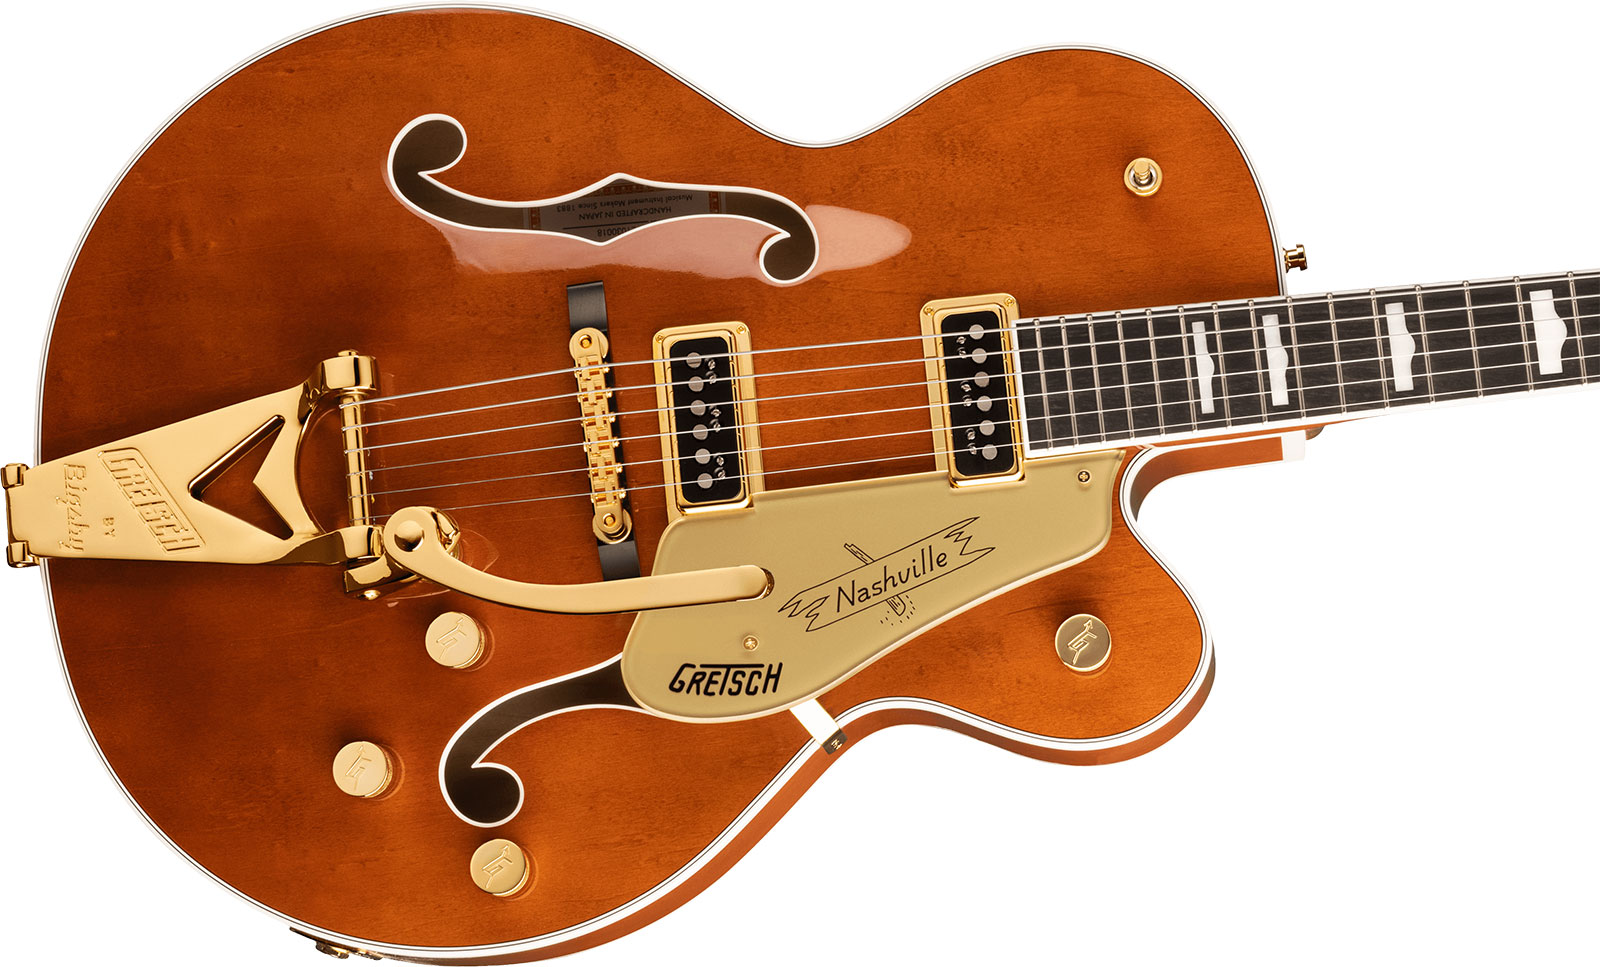 Gretsch G6120tg-ds Players Edition Nashville Pro Jap Bigsby Eb - Roundup Orange - Semi-hollow electric guitar - Variation 2